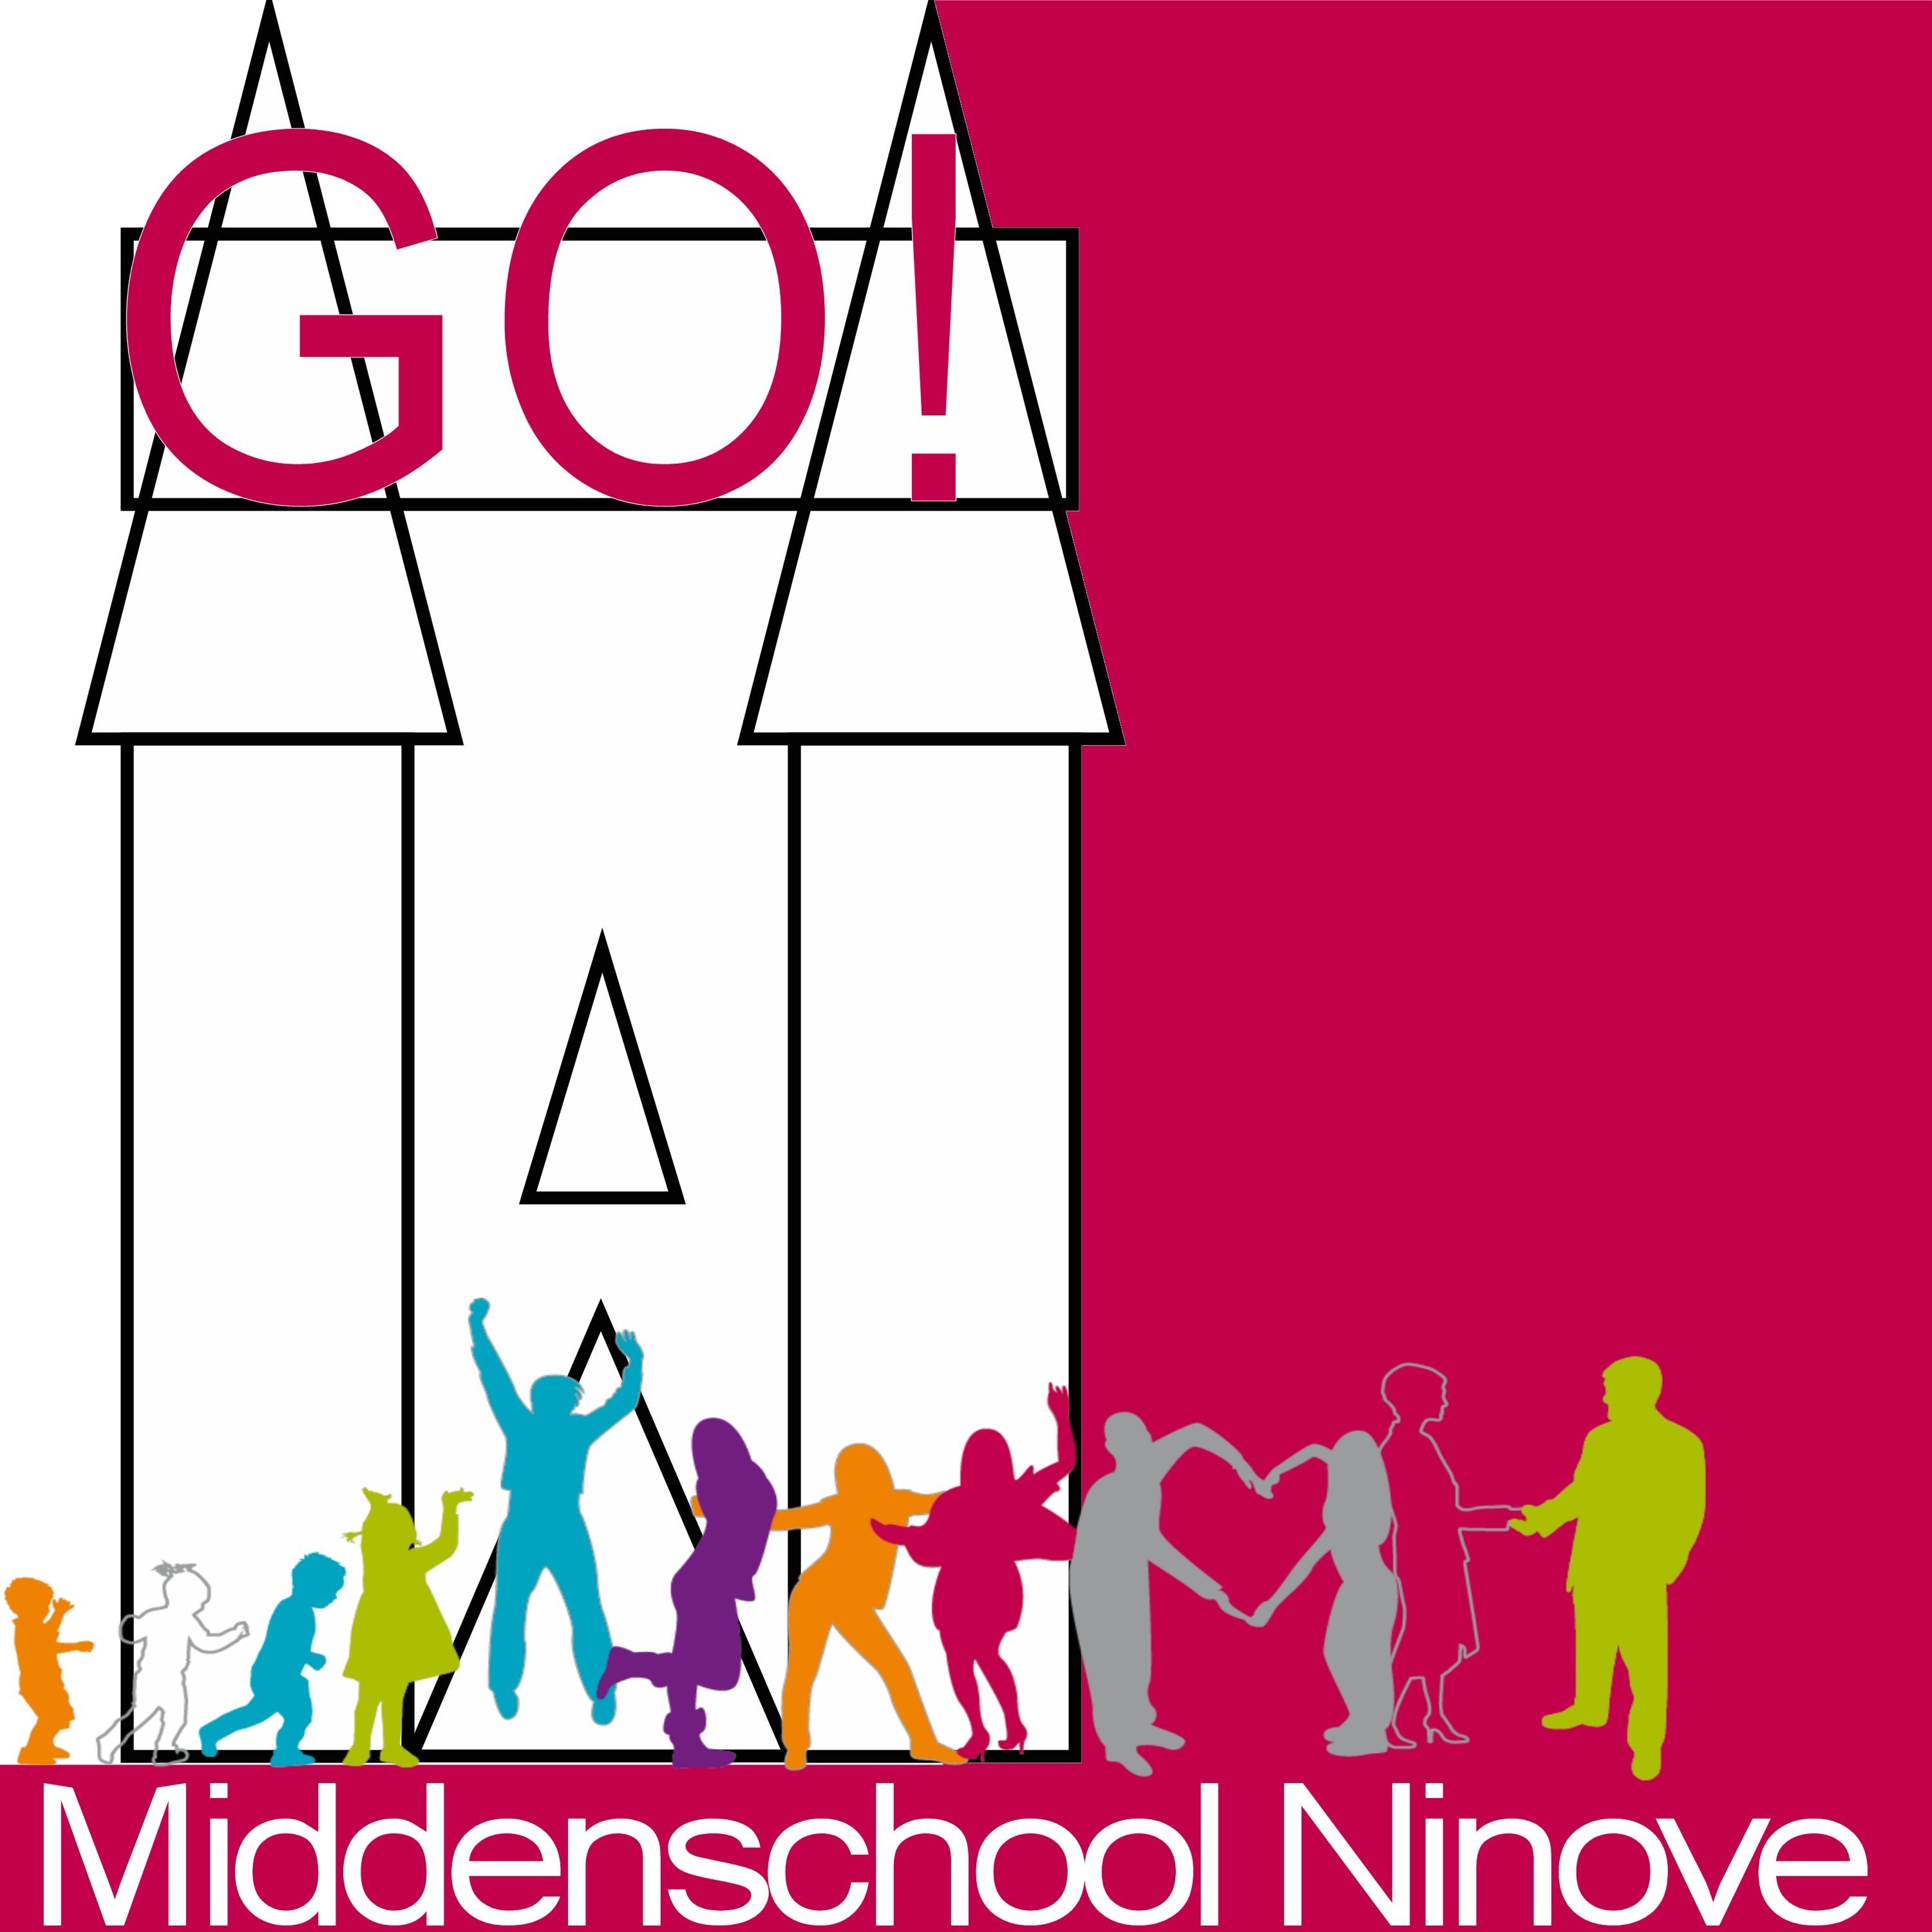 https://www.middenschool-ninove.be/